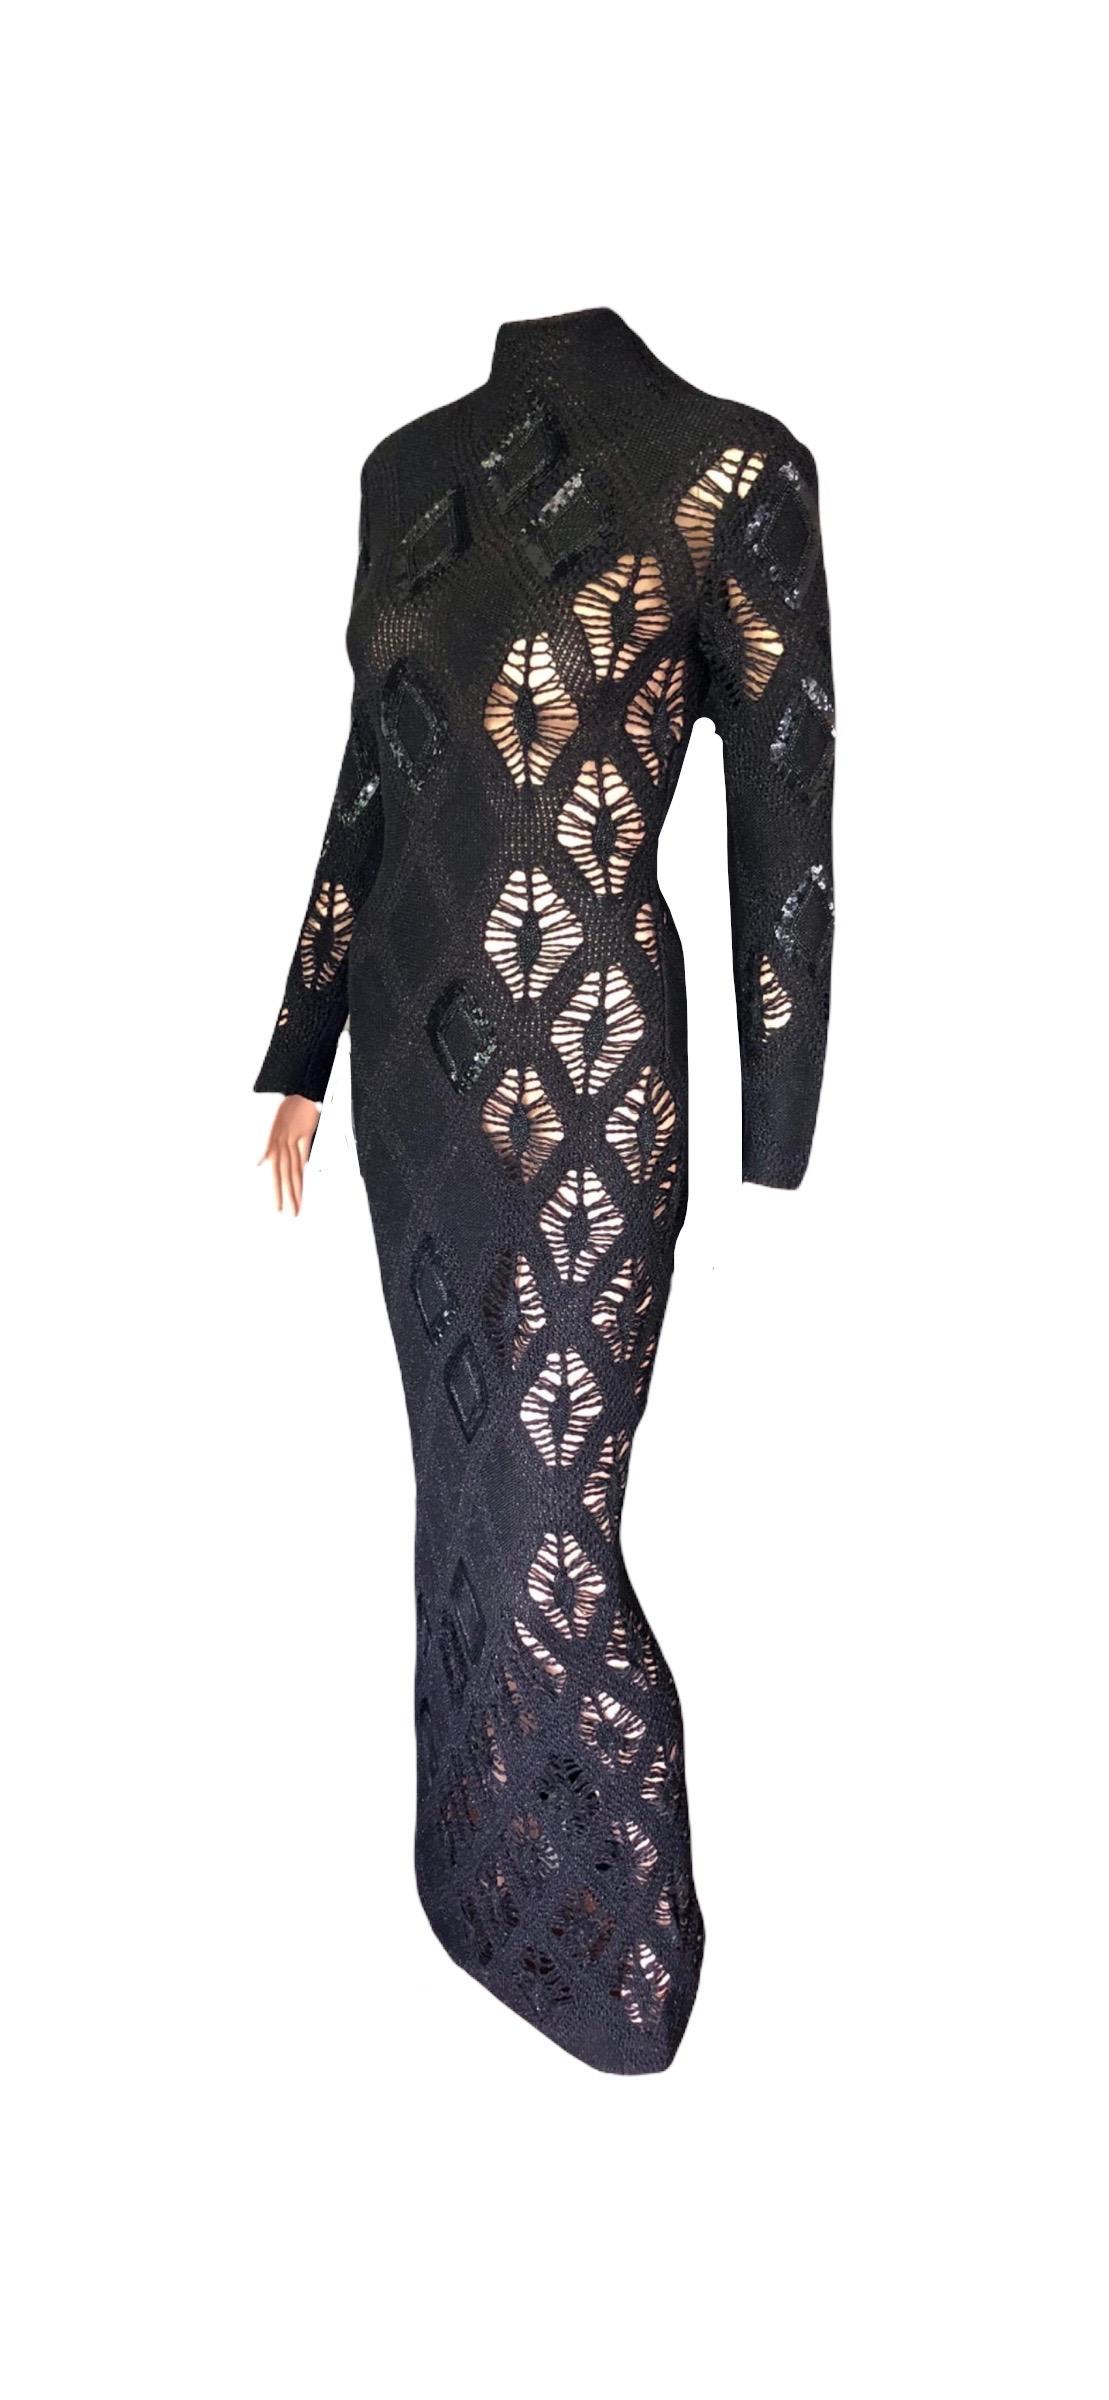 Gianfranco Ferre S/S 2002 Beaded Sequin Sheer Crochet Knit Black Maxi Dress Gown For Sale 9